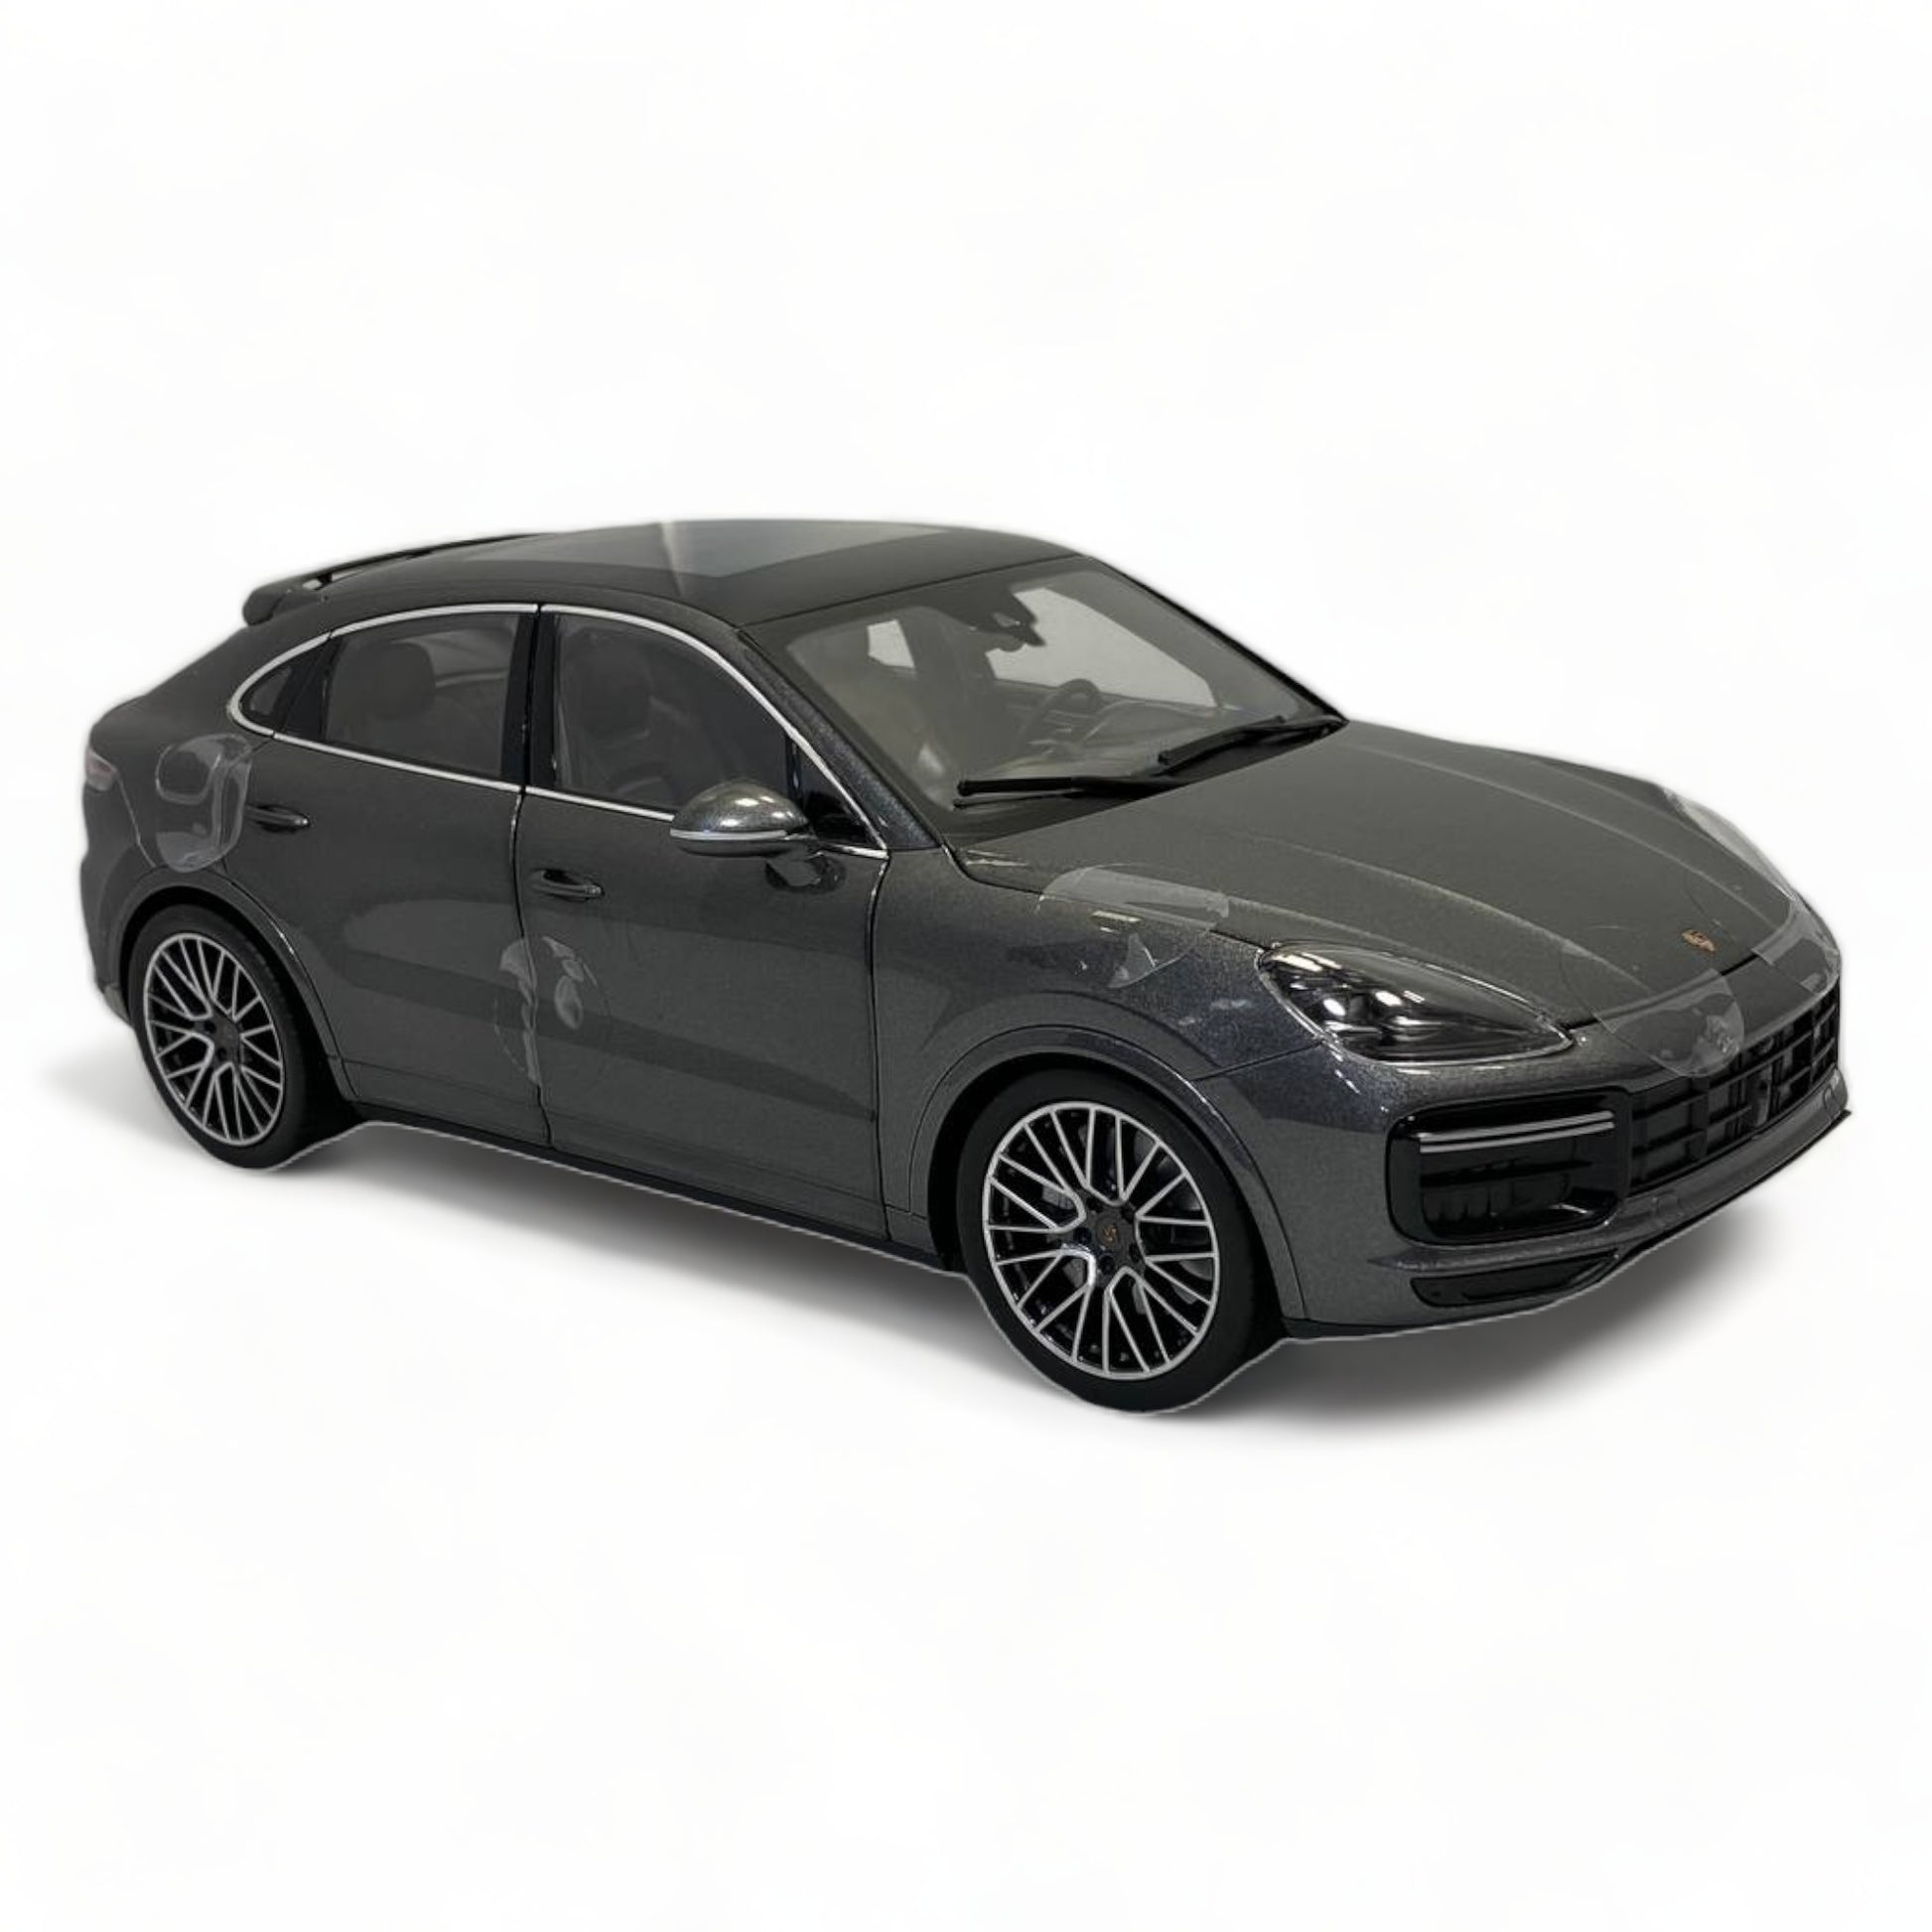 1/18 Diecast Norev Porsche CAYENNE TURBO COUPE 2019 in Grey Model Car|Sold in Dturman.com Dubai UAE.